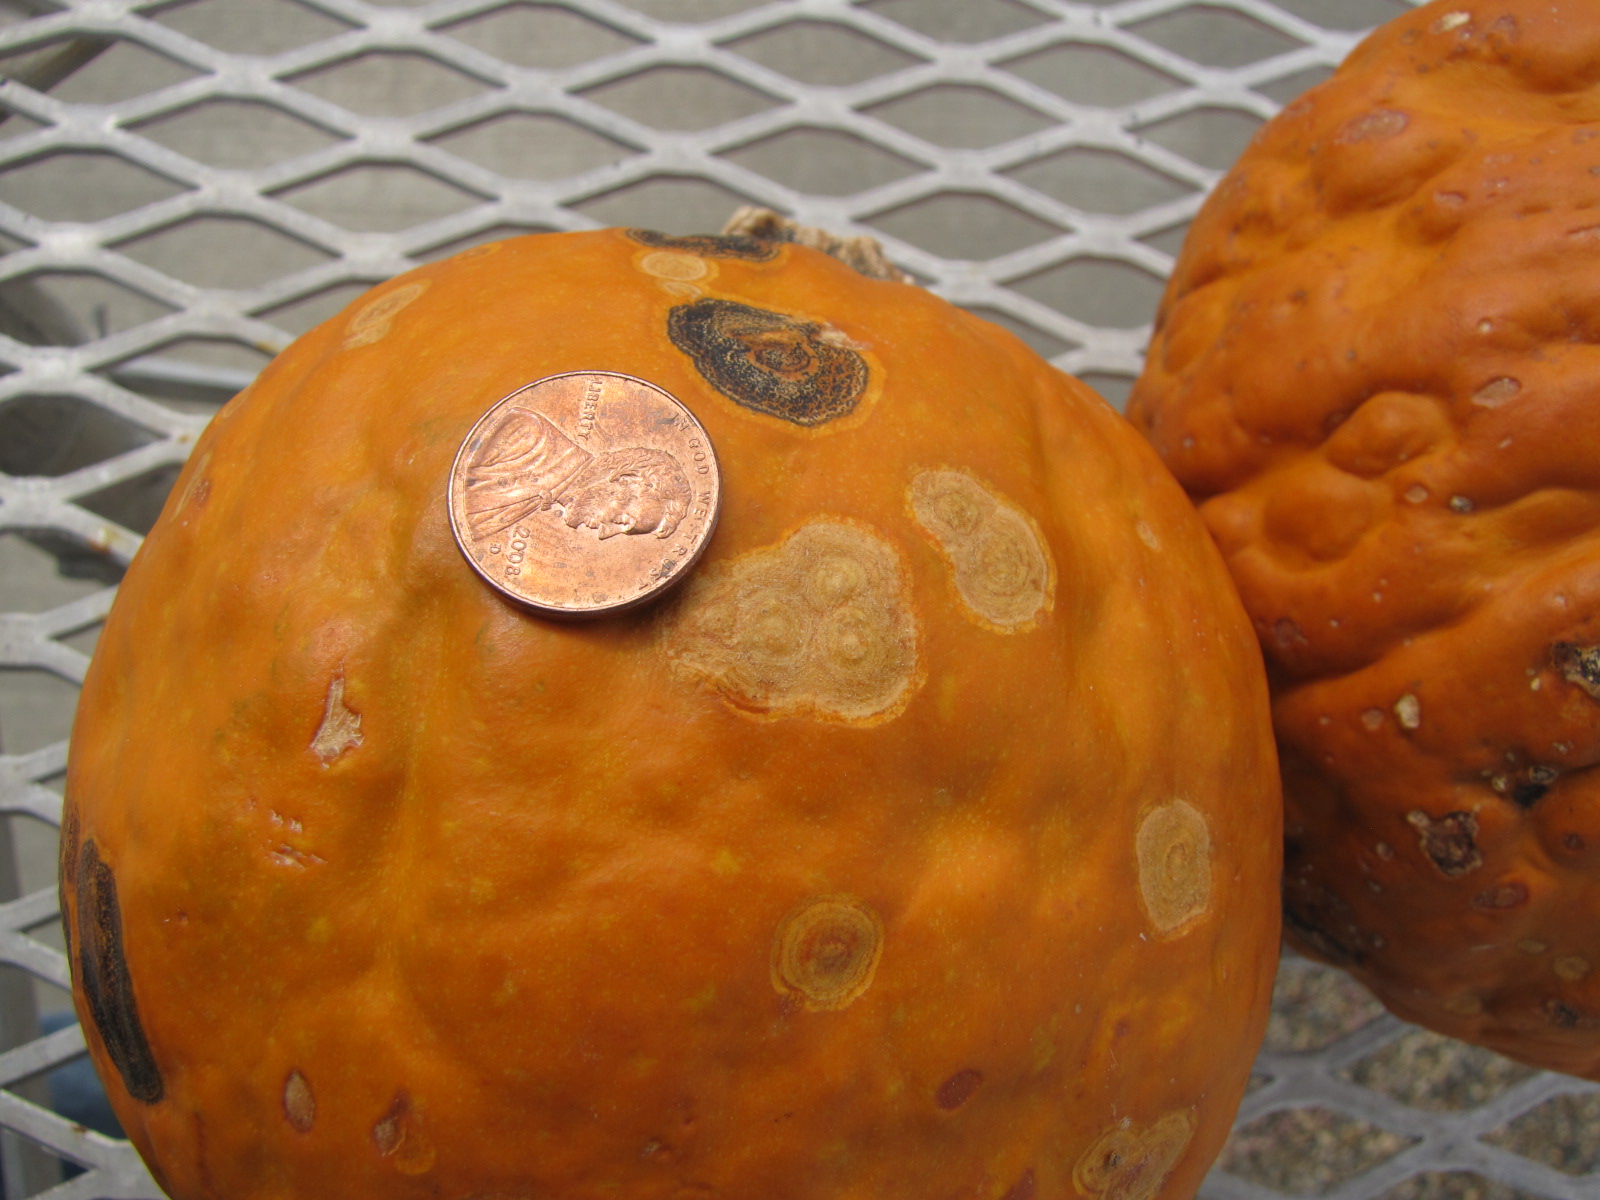  Anthracnose lesion on pumpkin